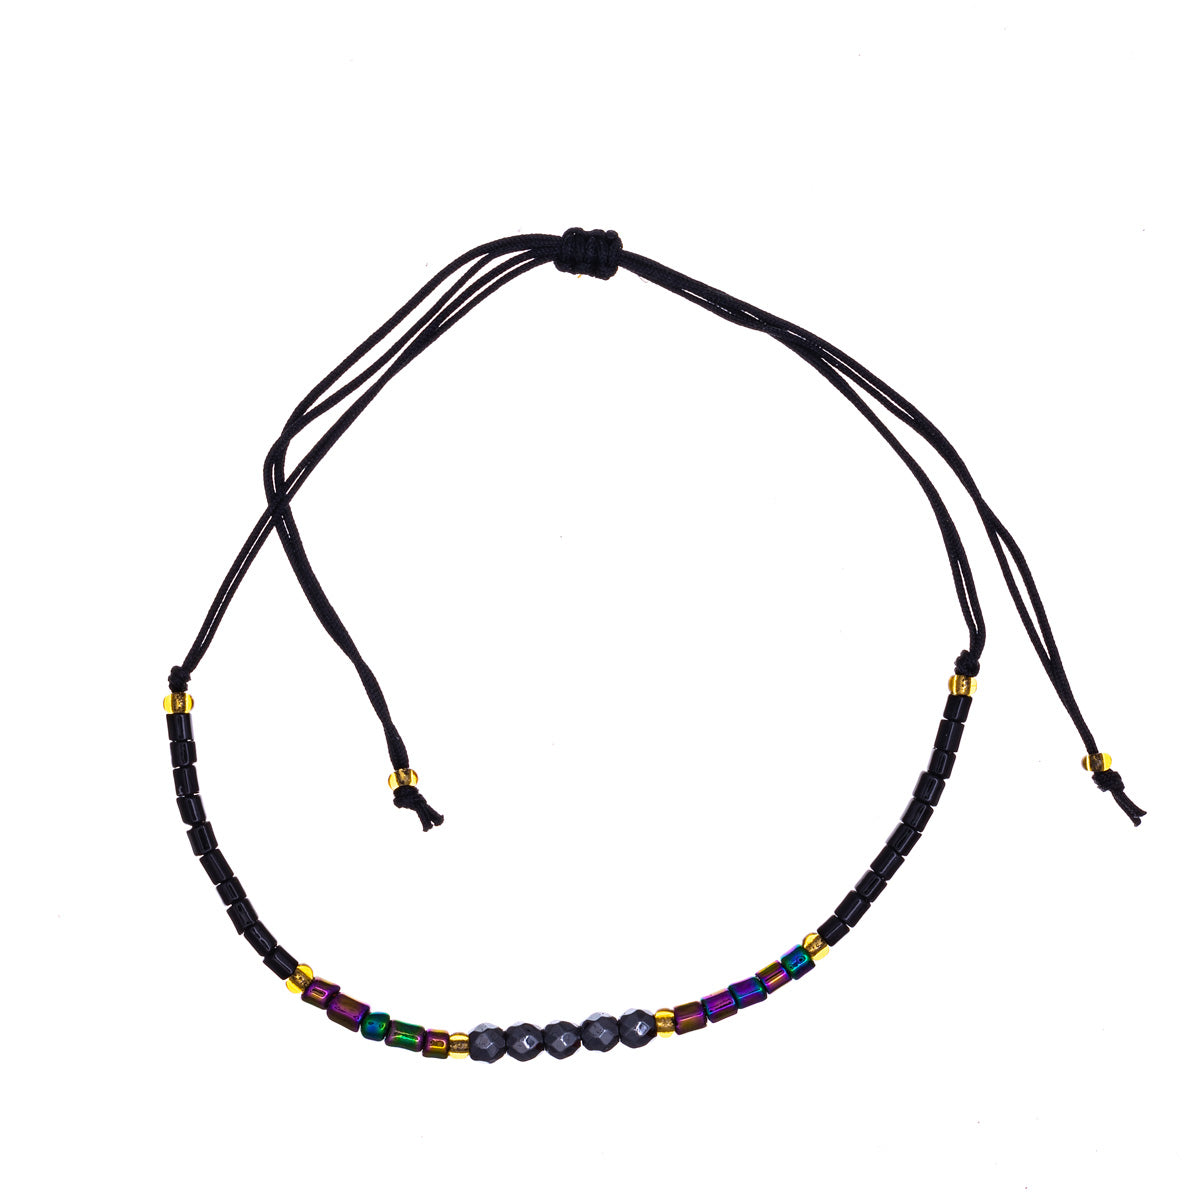 Minimalist bracelet with sparkling beads